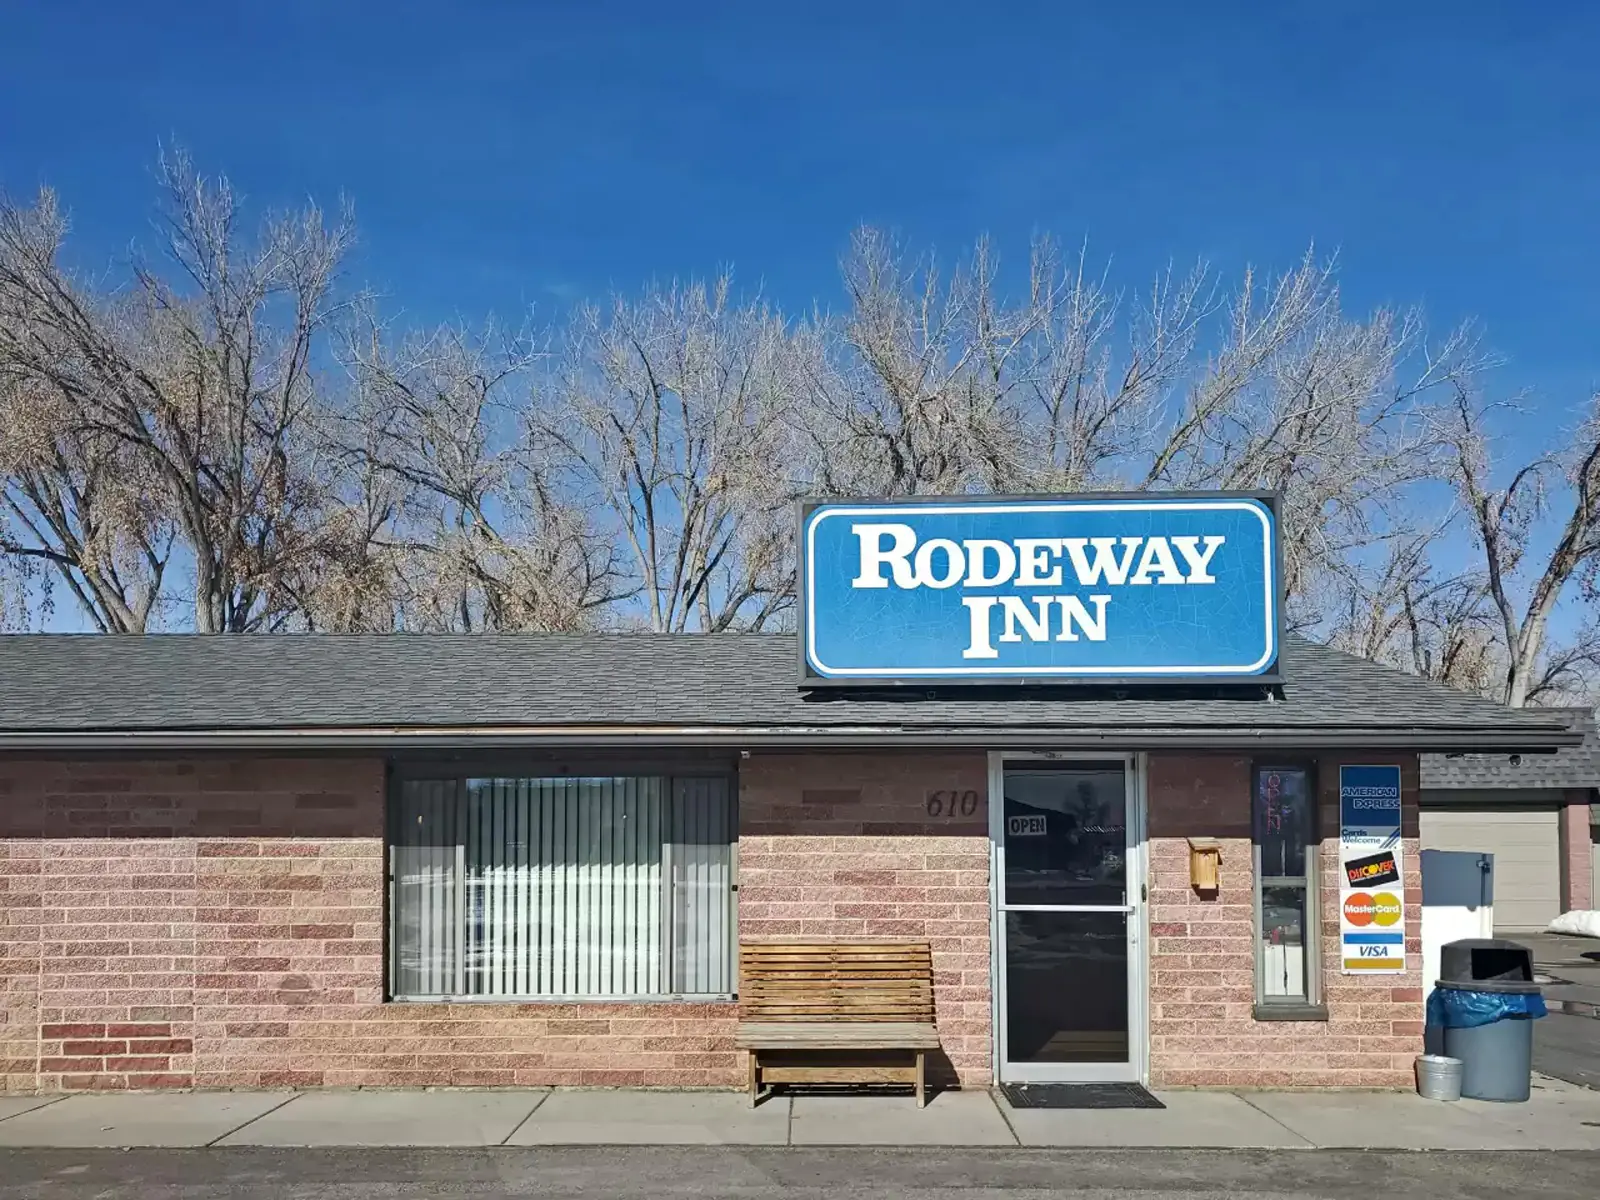 Rodeway Inn/Wyo Motel